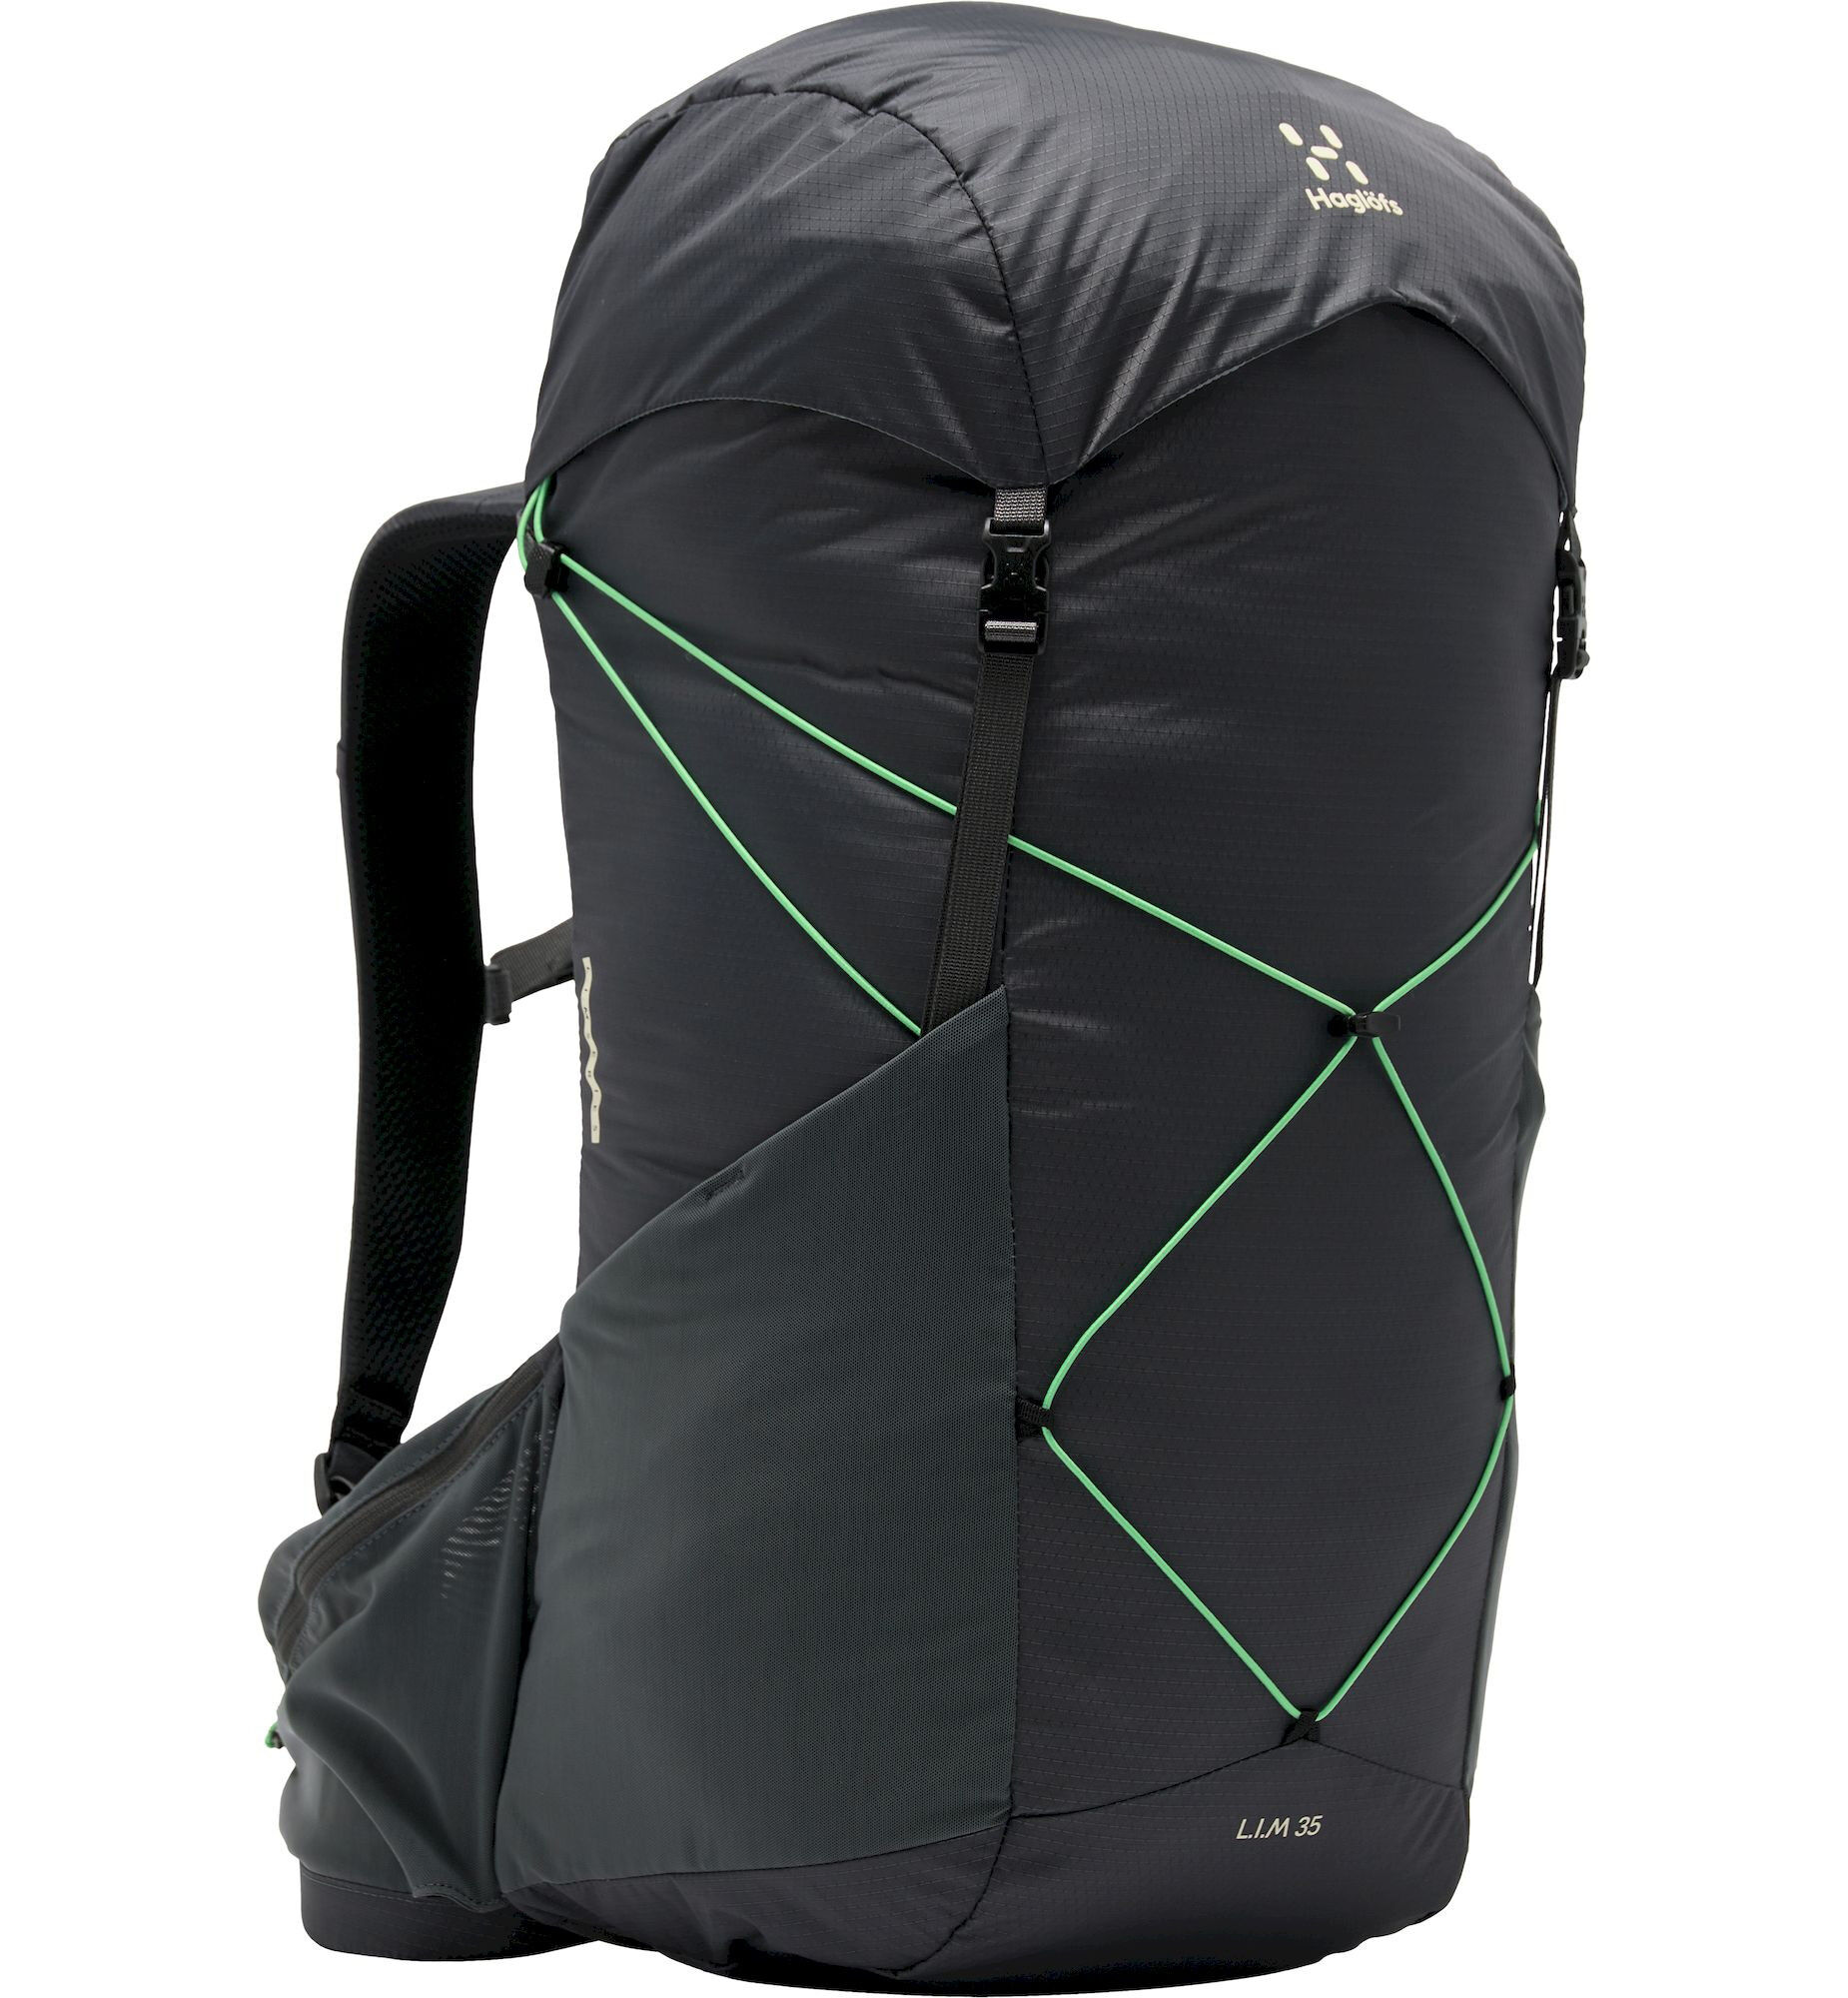 Haglöfs L.I.M 35 - Hiking backpack